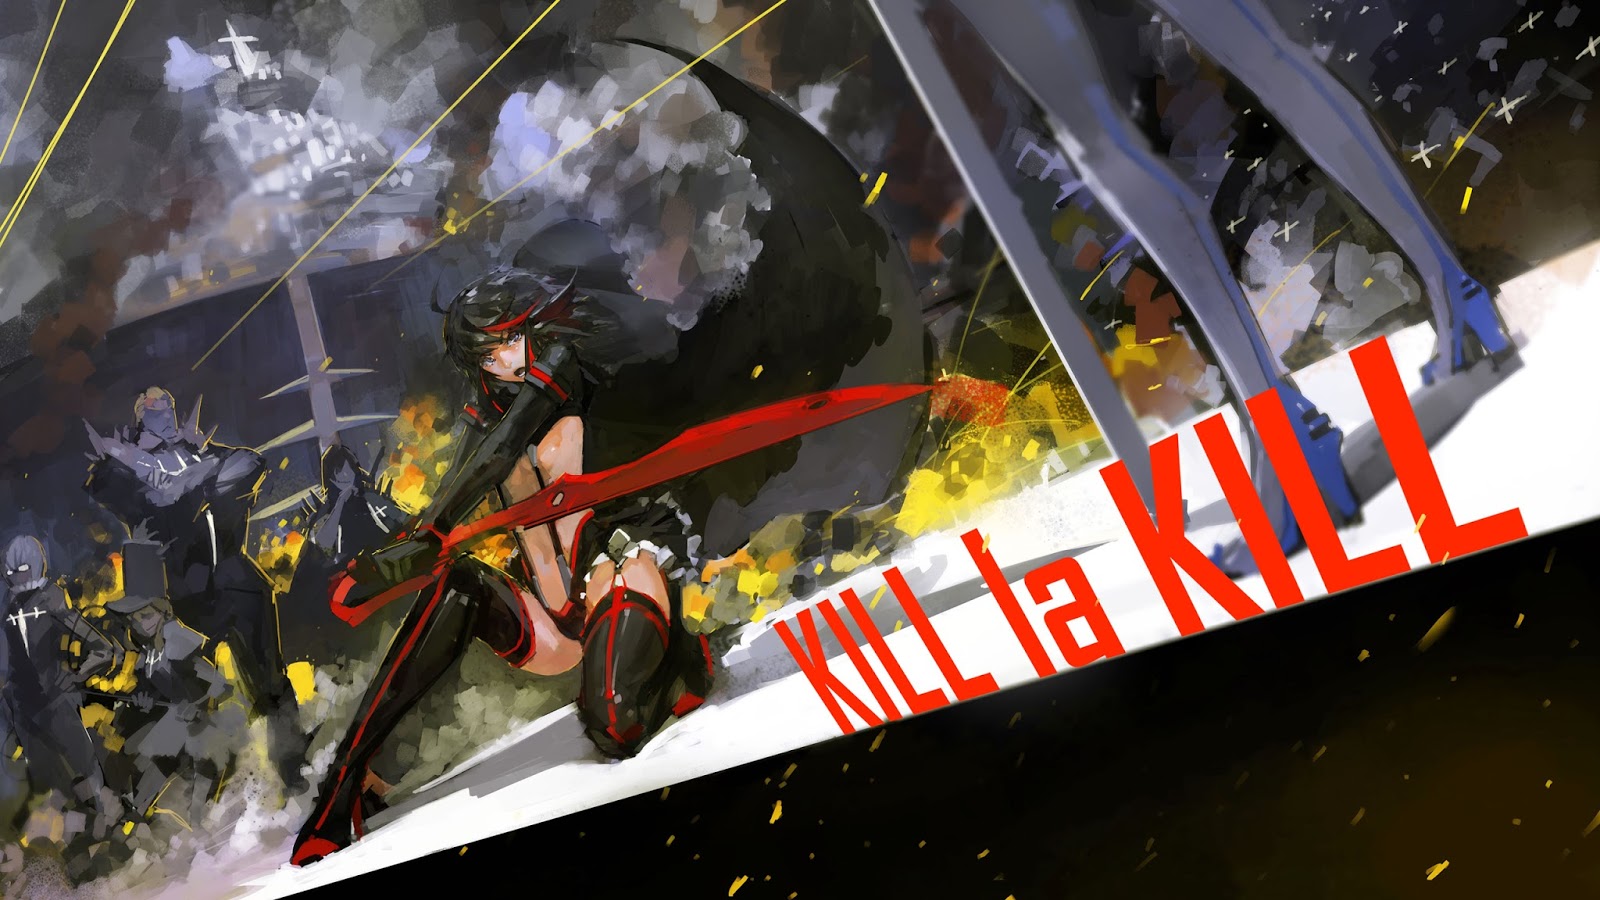 http://2.bp.blogspot.com/-sW-szyF_Ucc/UlyF_7OzRBI/AAAAAAAAJ0k/iCRqDYM4ztI/s1600/Kill-La-Kill-+matoi-ryuuko-girl-anime-hd-wallpaper404.com-weapon-sword.jpg